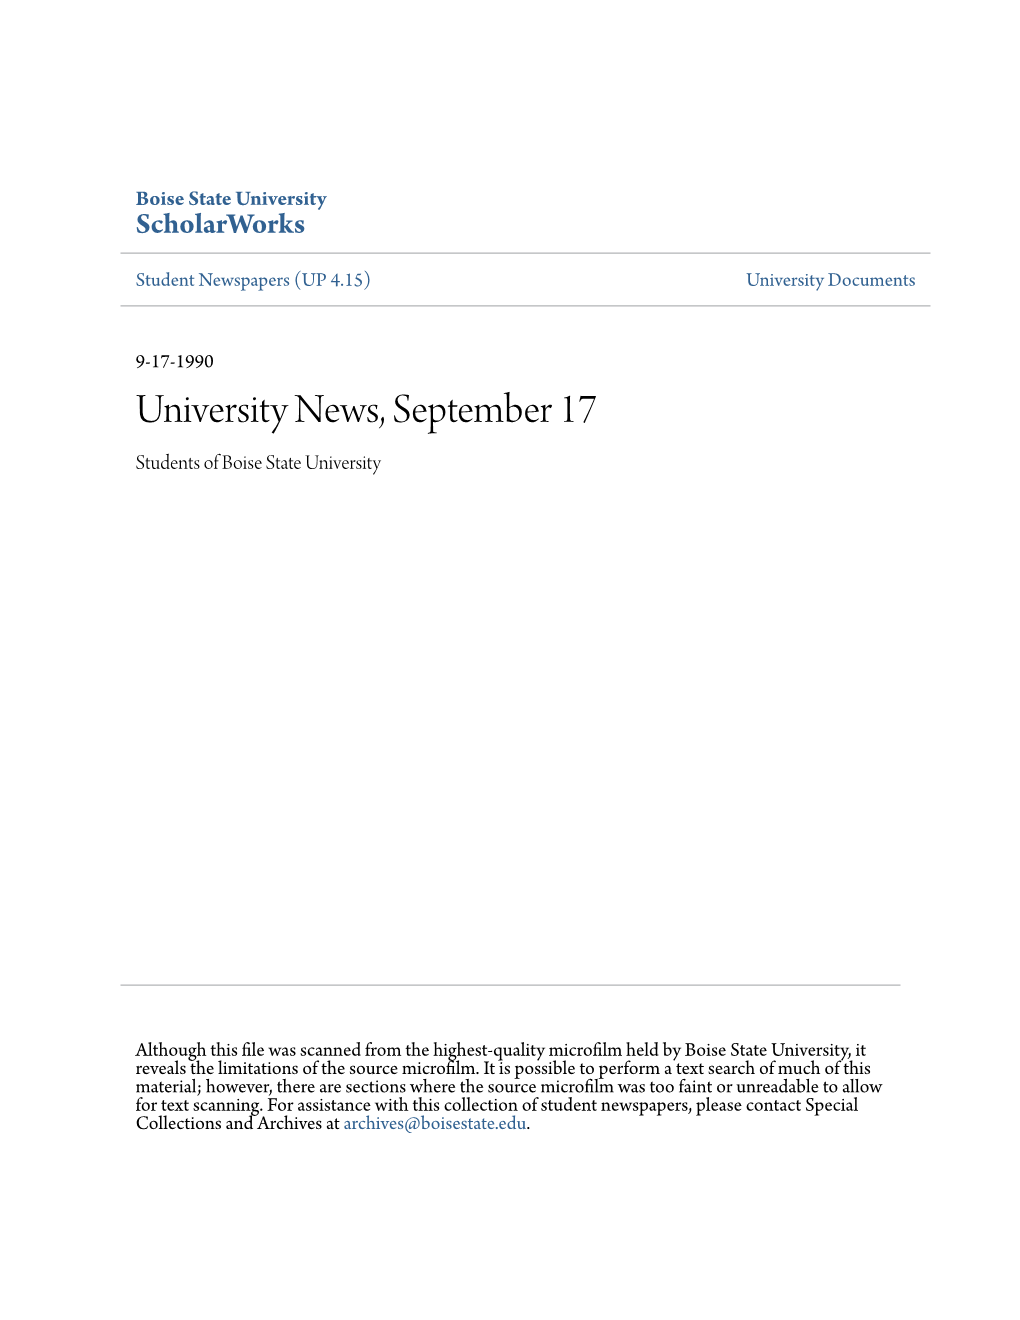 University News, September 17 Students of Boise State University